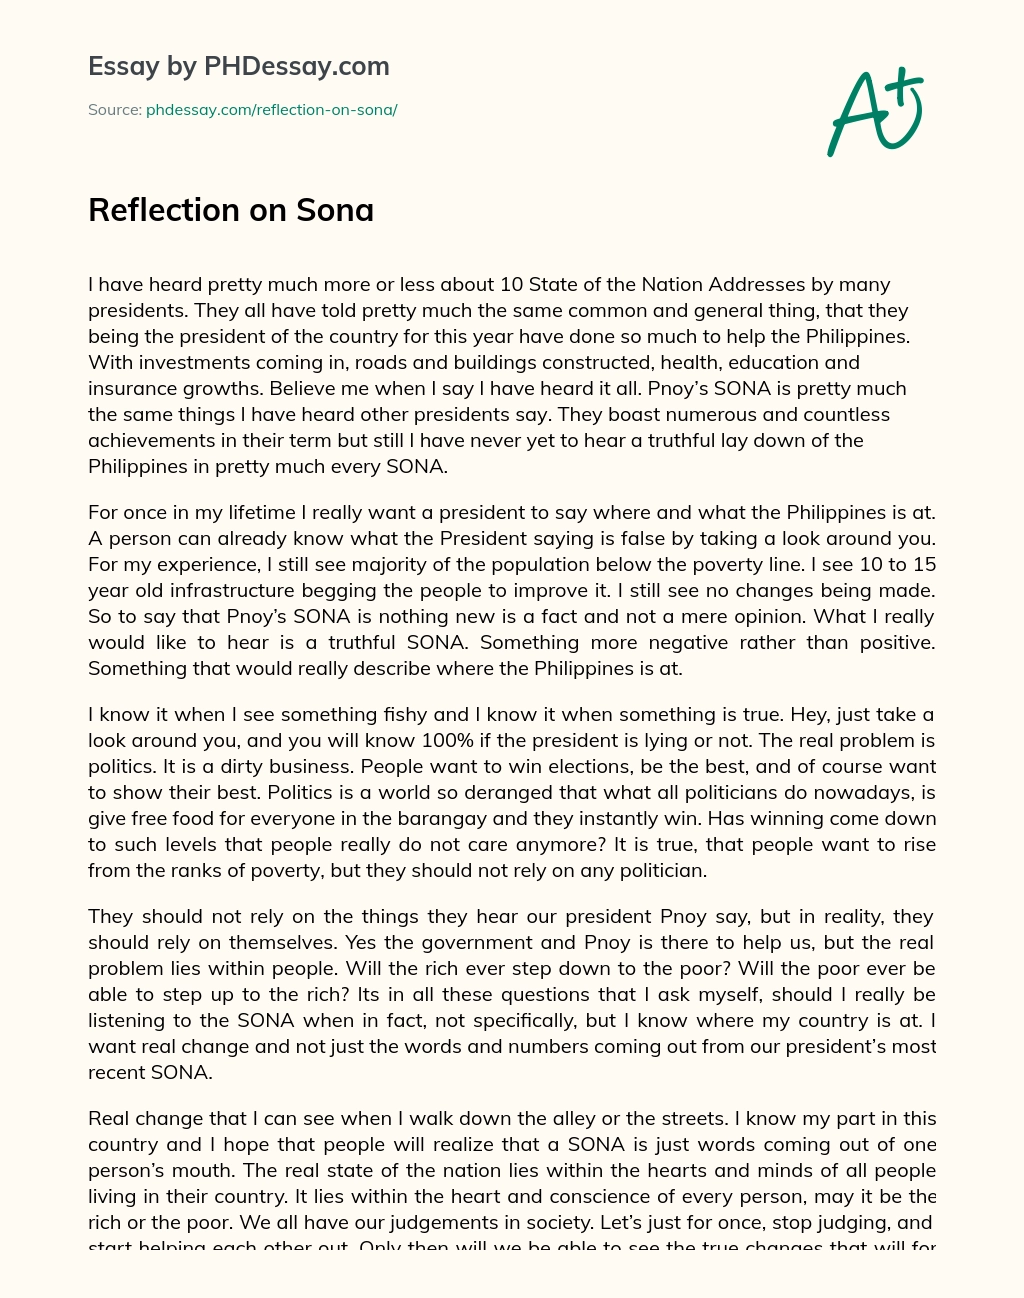 Reflection on Sona essay